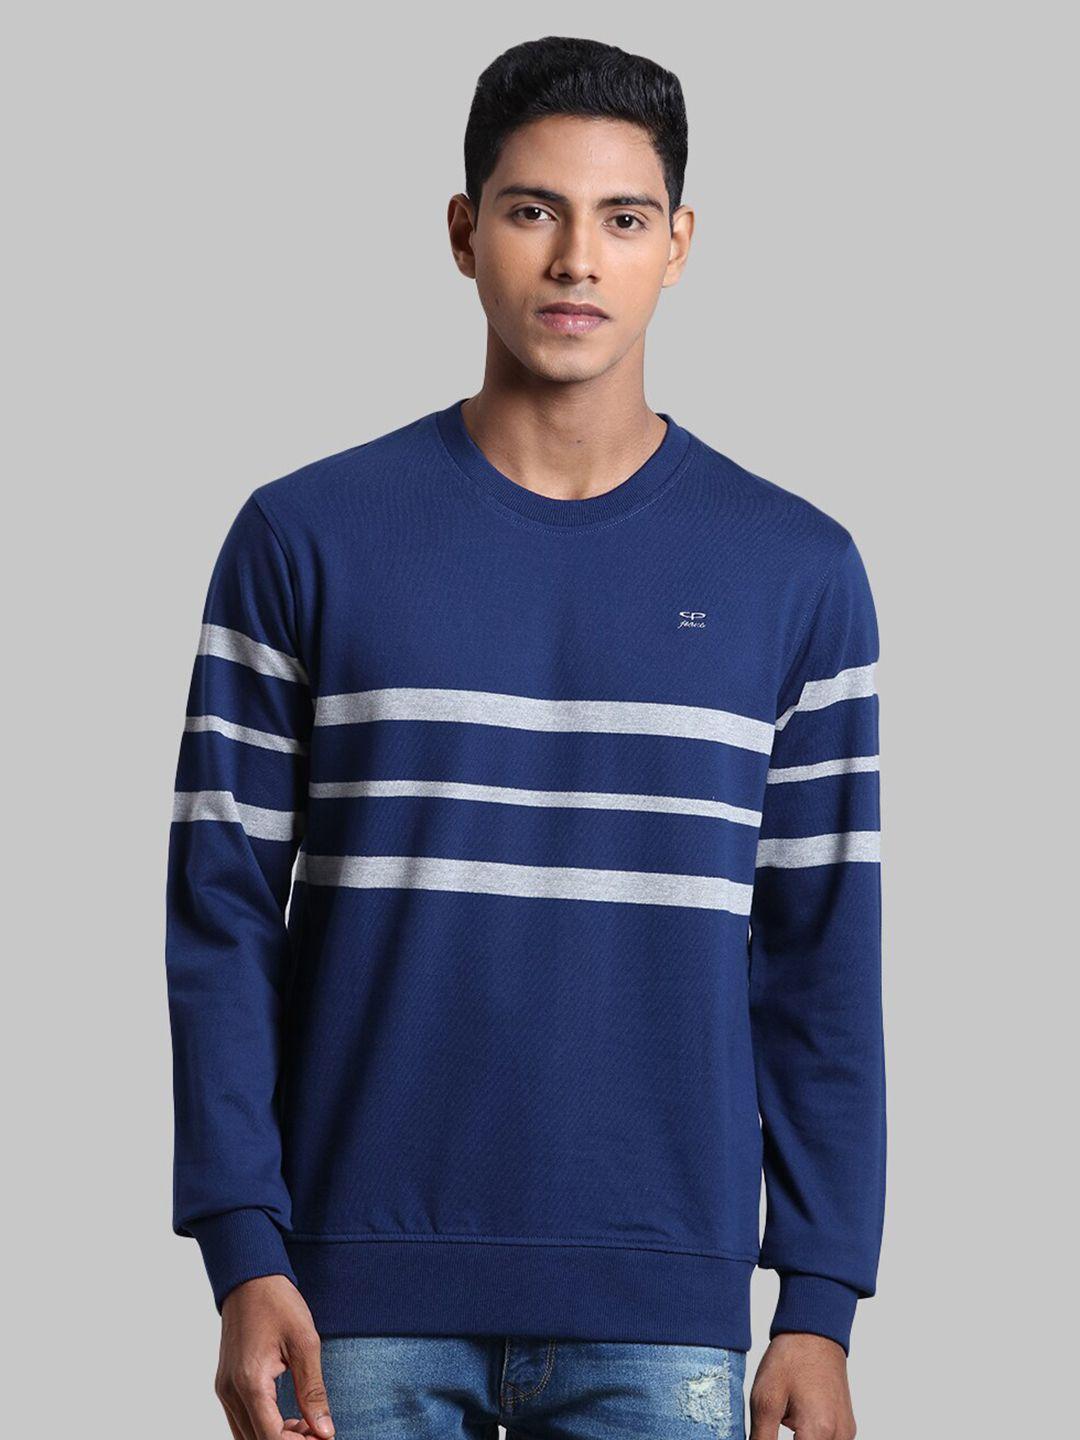 colorplus-men-blue-striped-sweatshirt